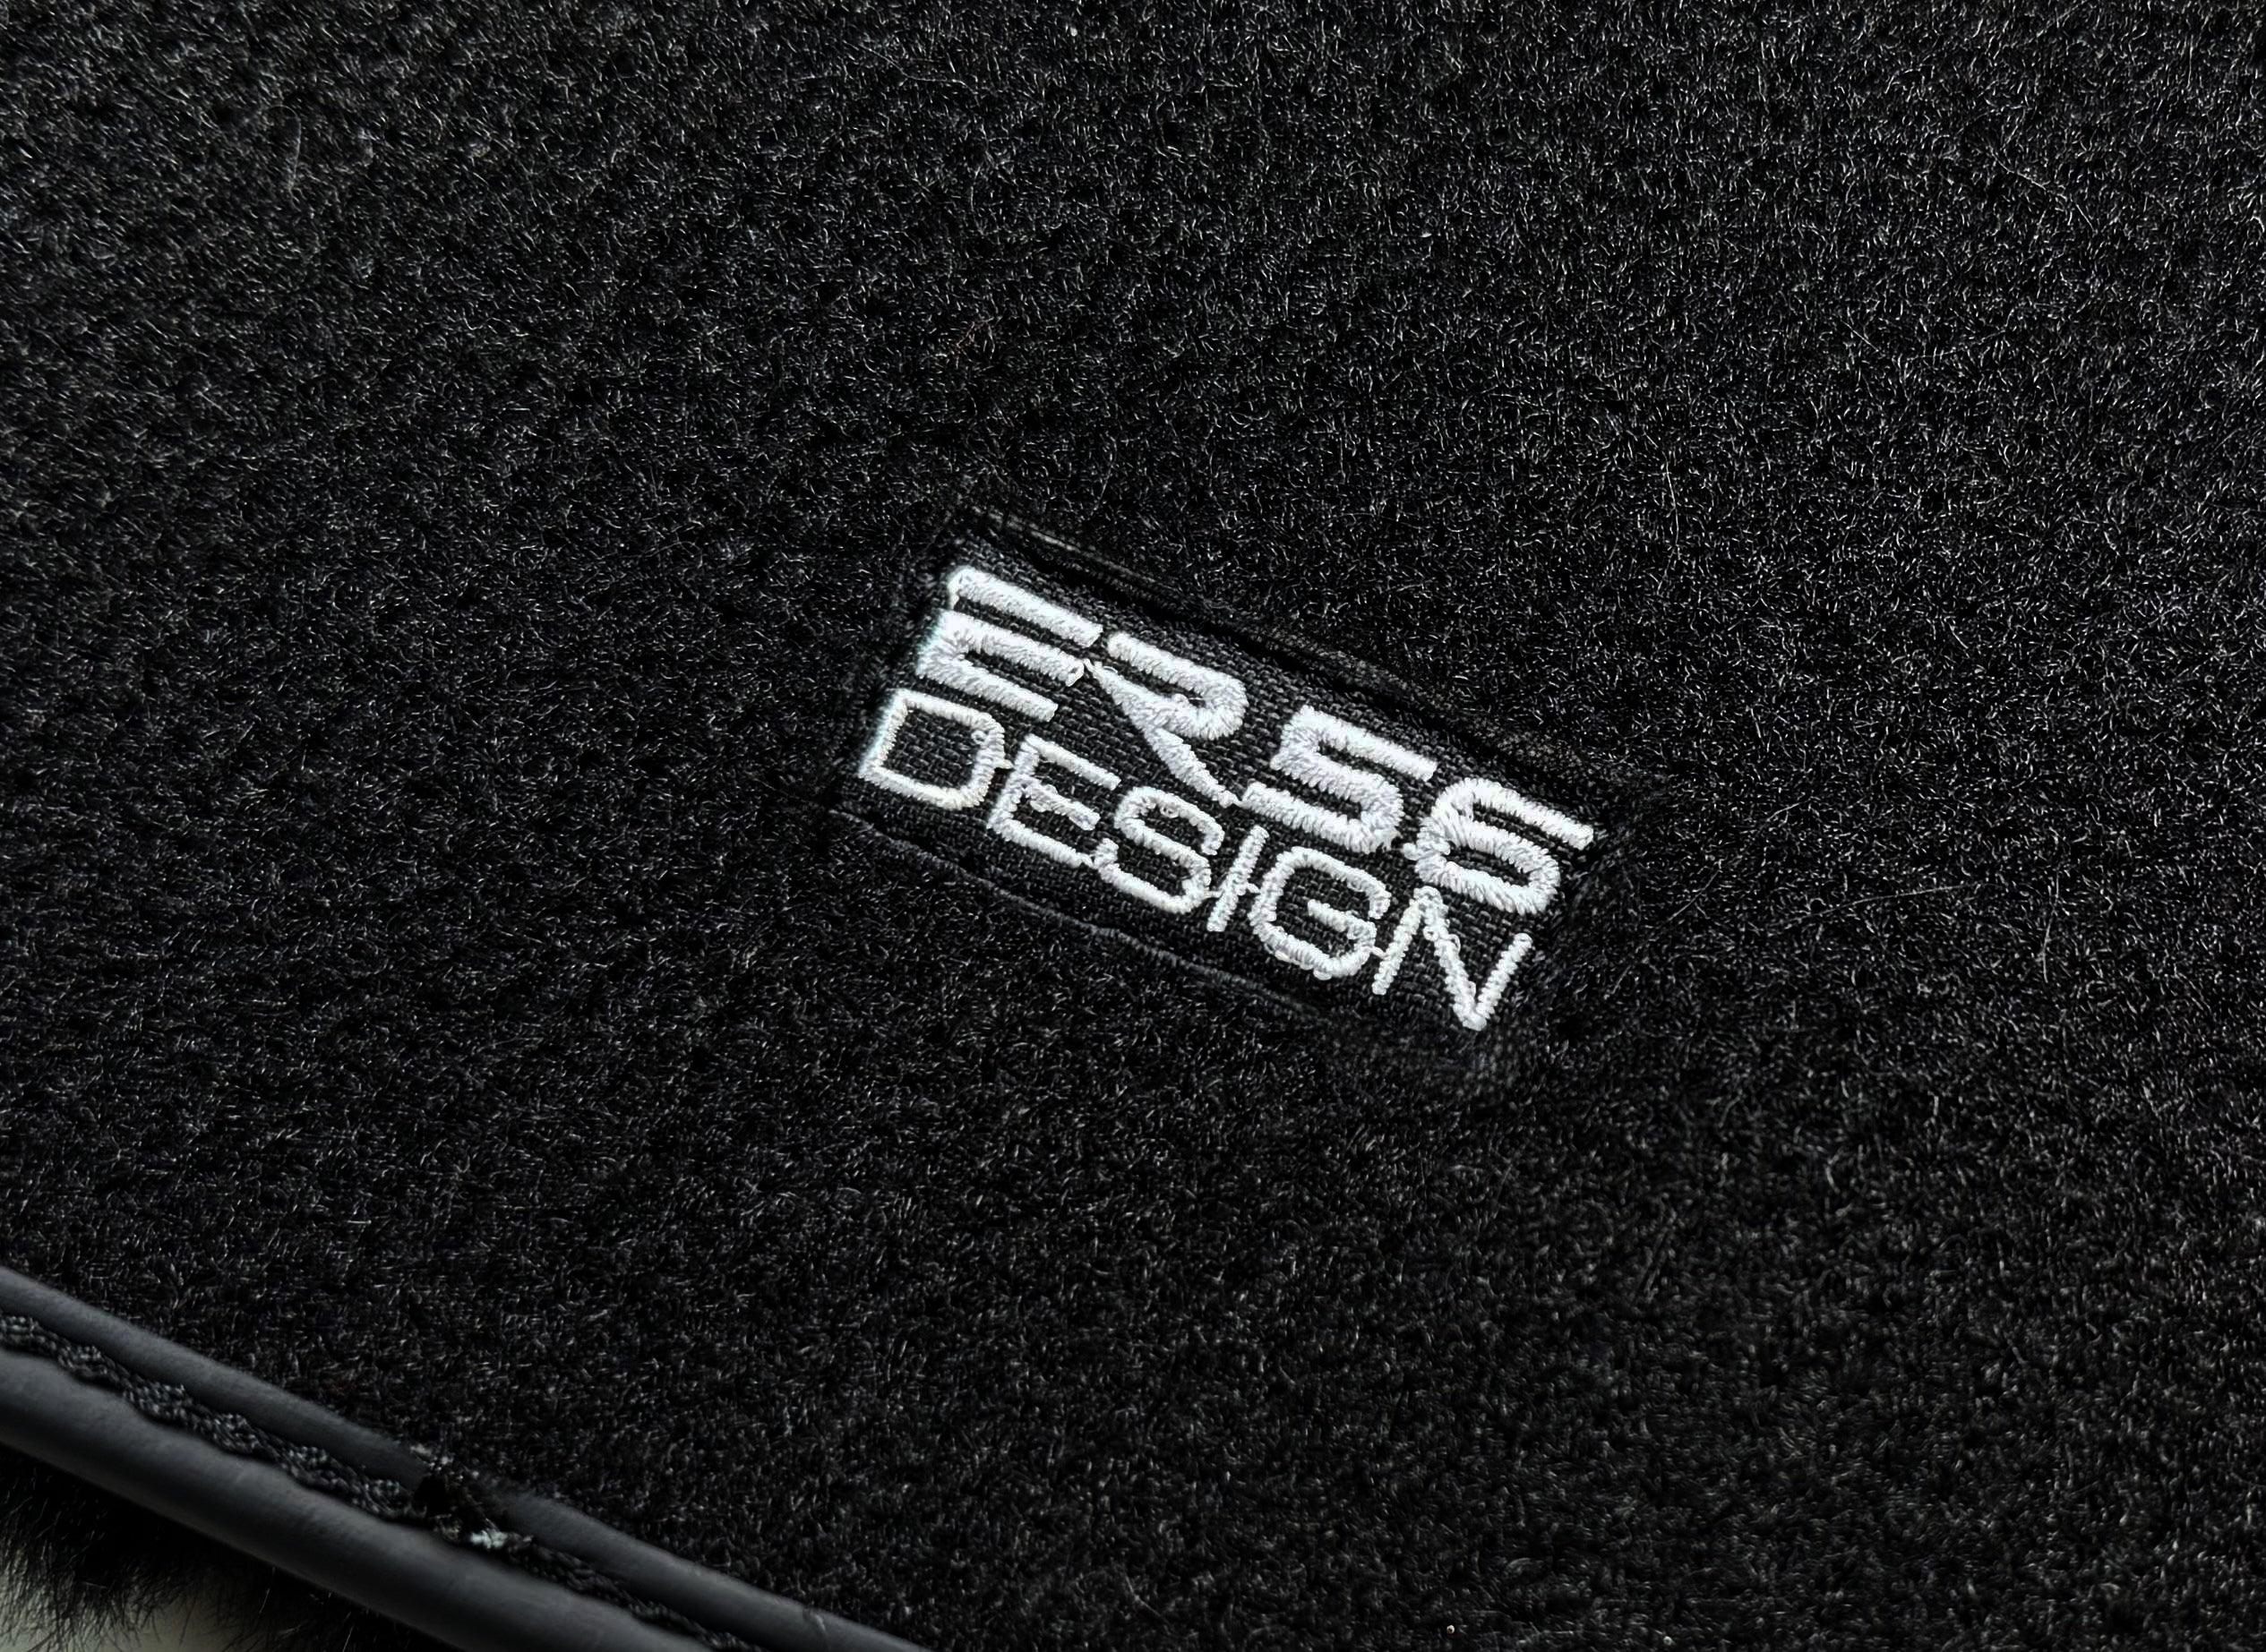 Black Sheepskin Floor Floor Mats For BMW X3M Series F97 ER56 Design